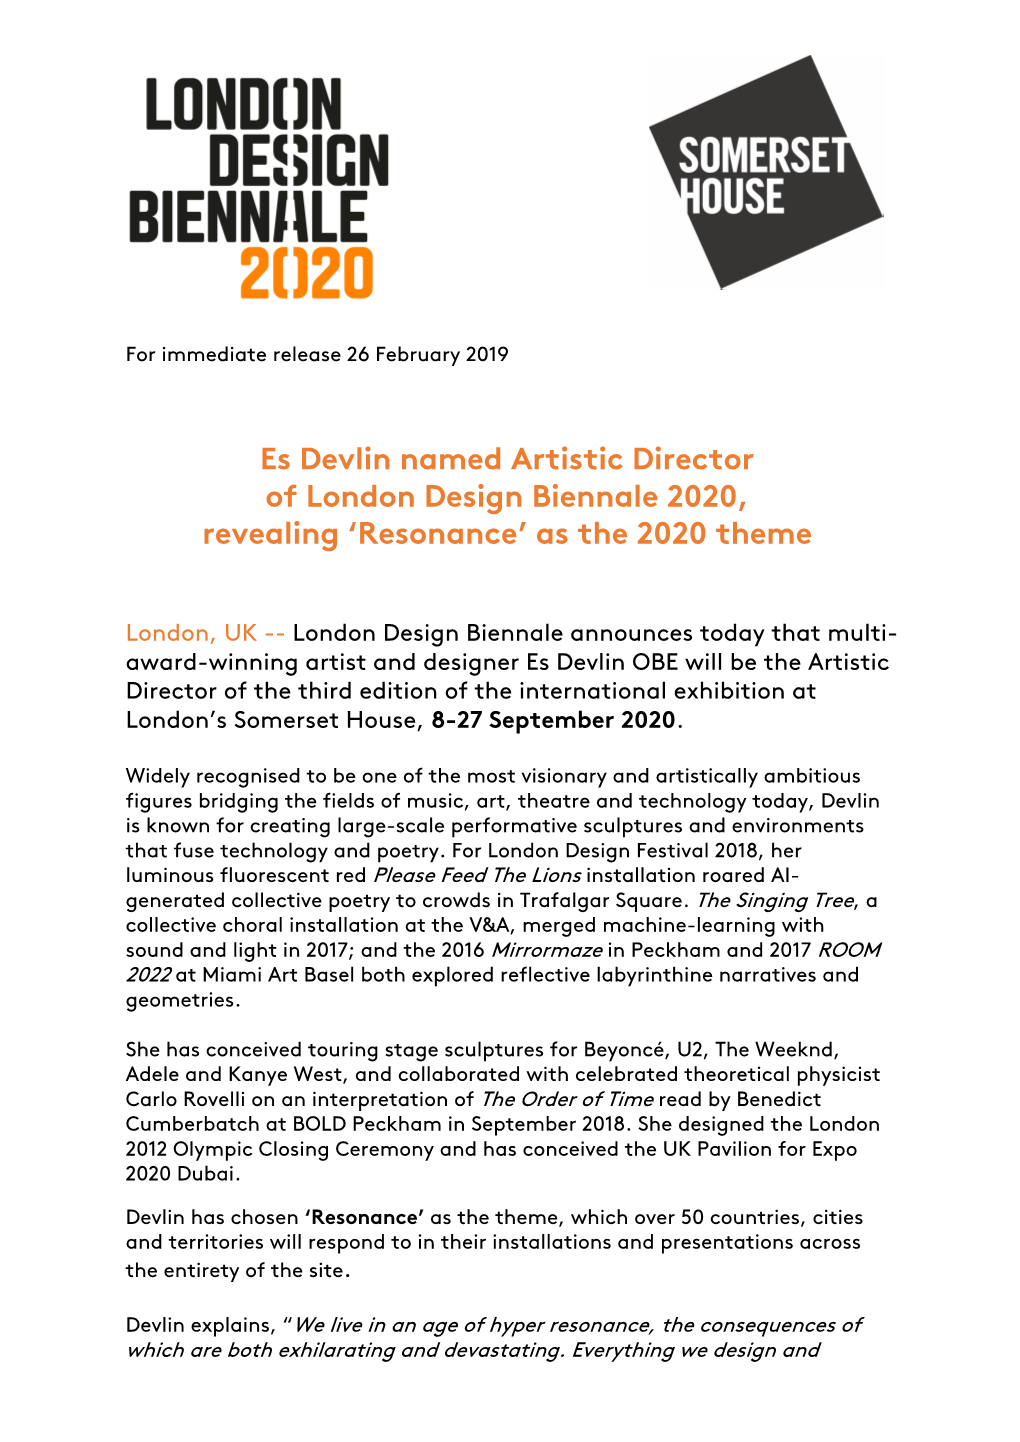 Es Devlin Named Artistic Director of London Design Biennale 2020, Revealing ‘Resonance’ As the 2020 Theme